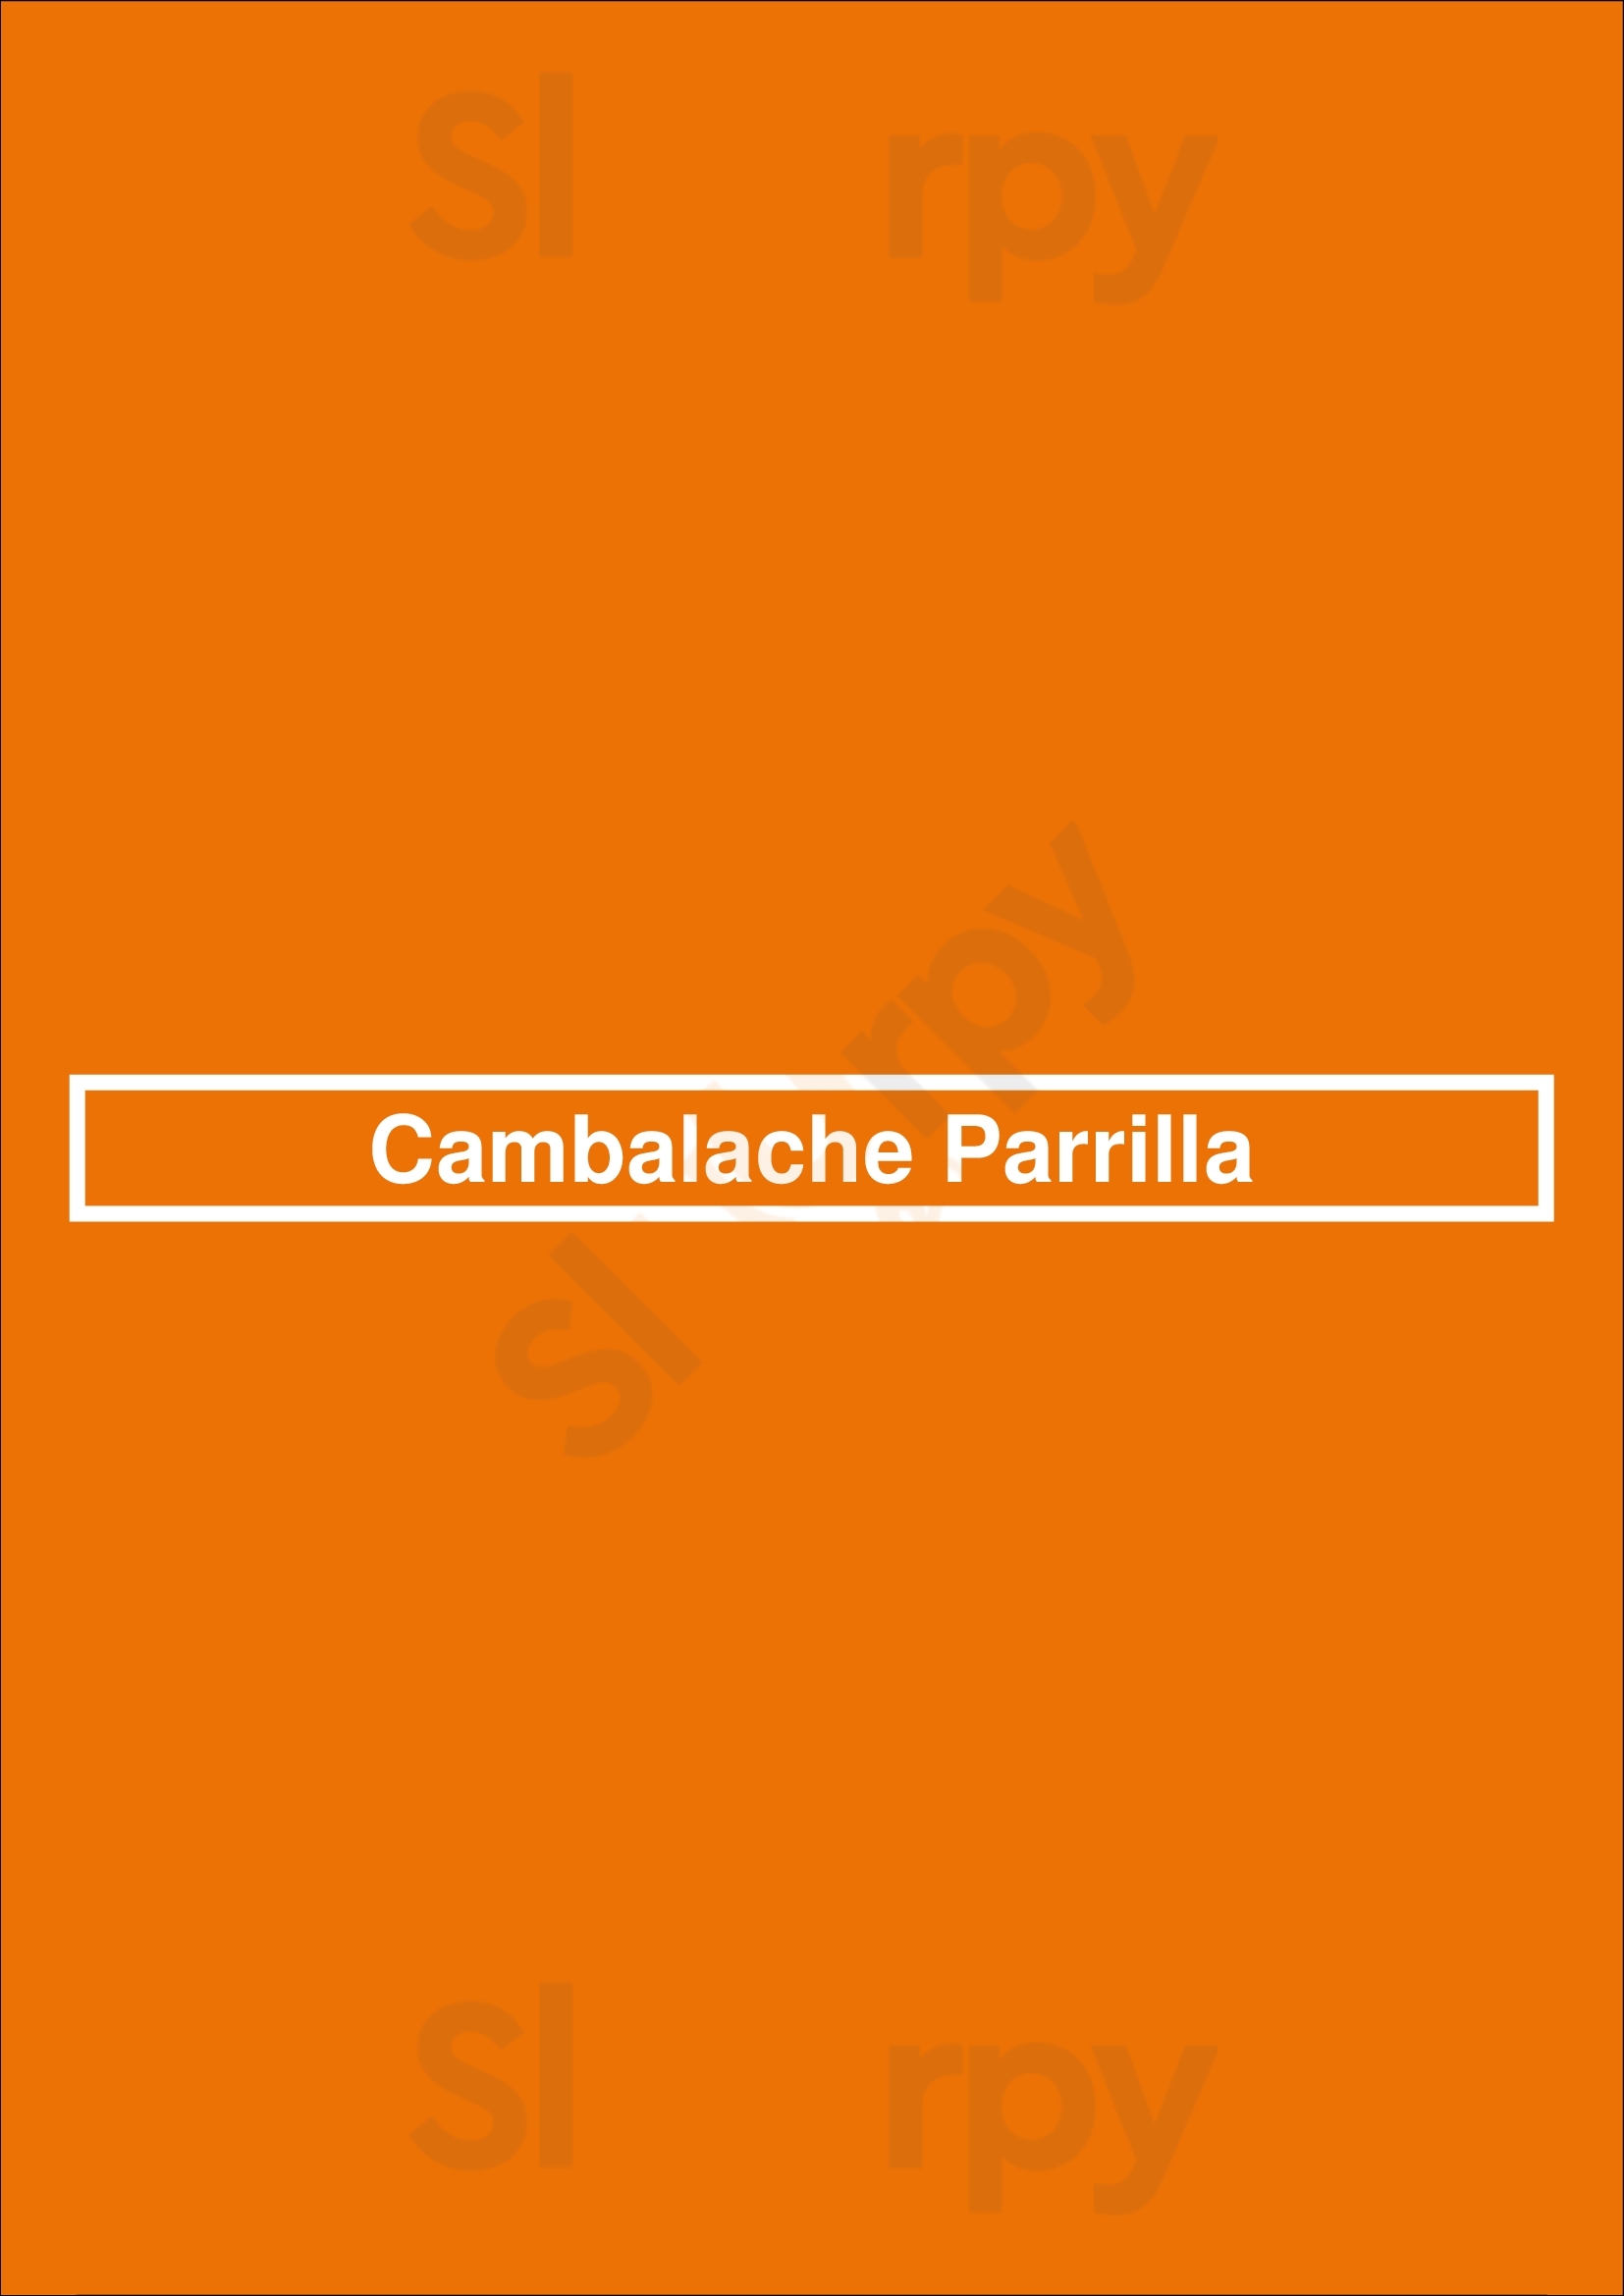 Cambalache Parrilla Barcelona Menu - 1